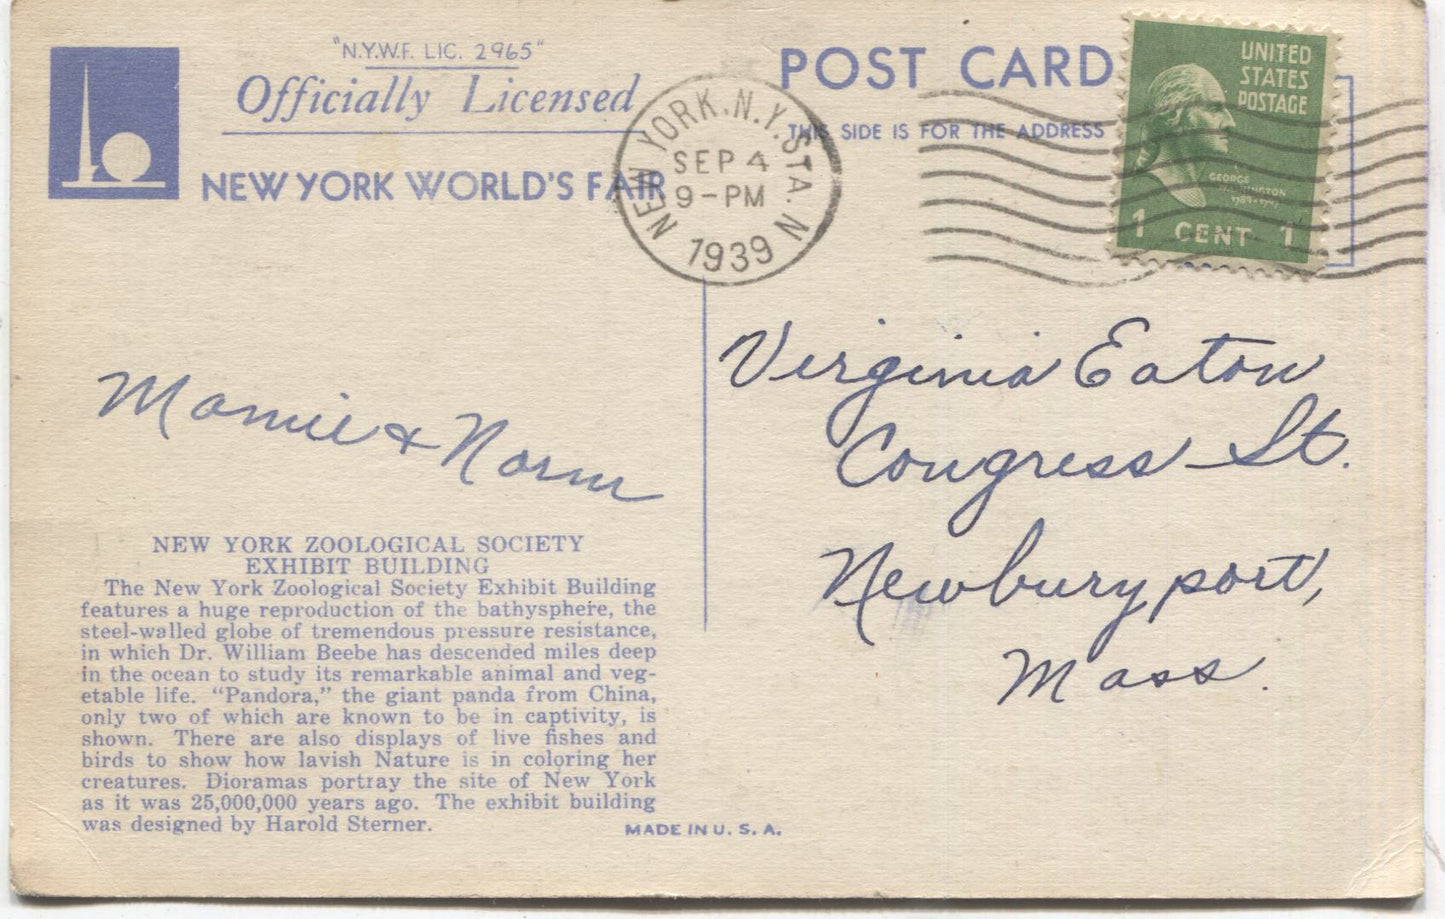 New York Zoological Society Exhibit Building, New York World's Fair Vintage Postcard